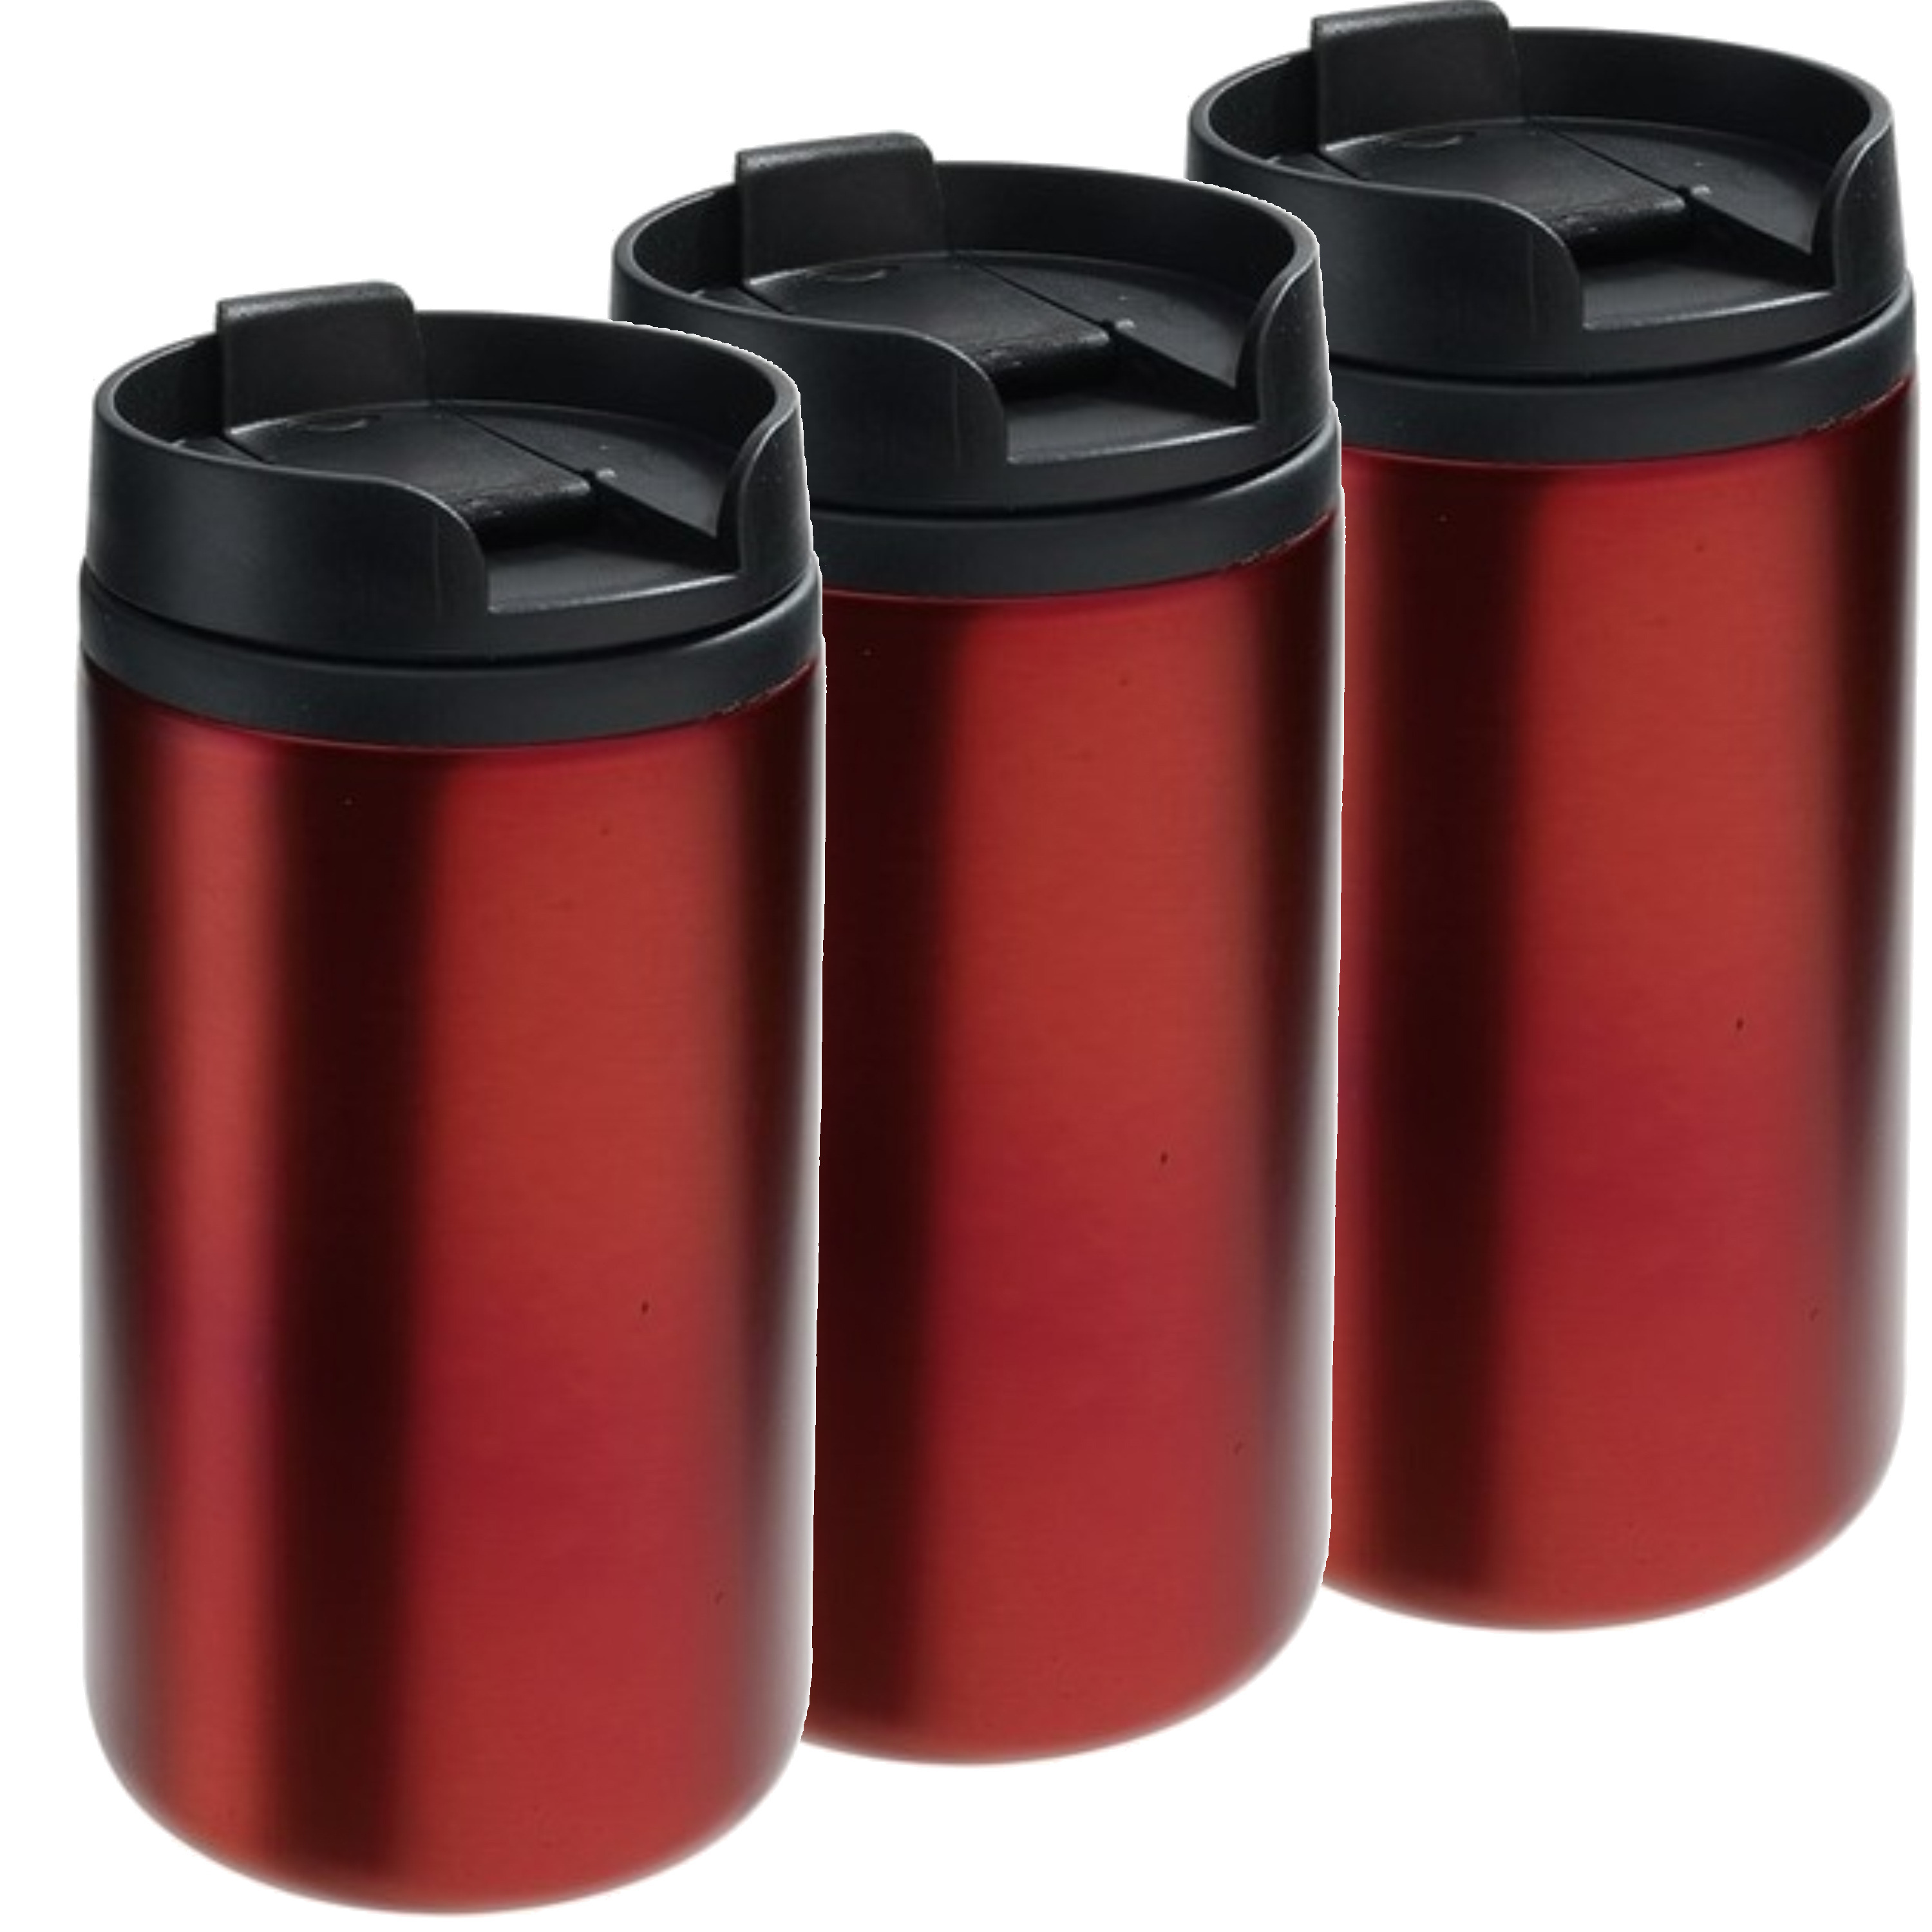 10x Thermosbekers/warmhoudbekers metallic rood 250 ml -